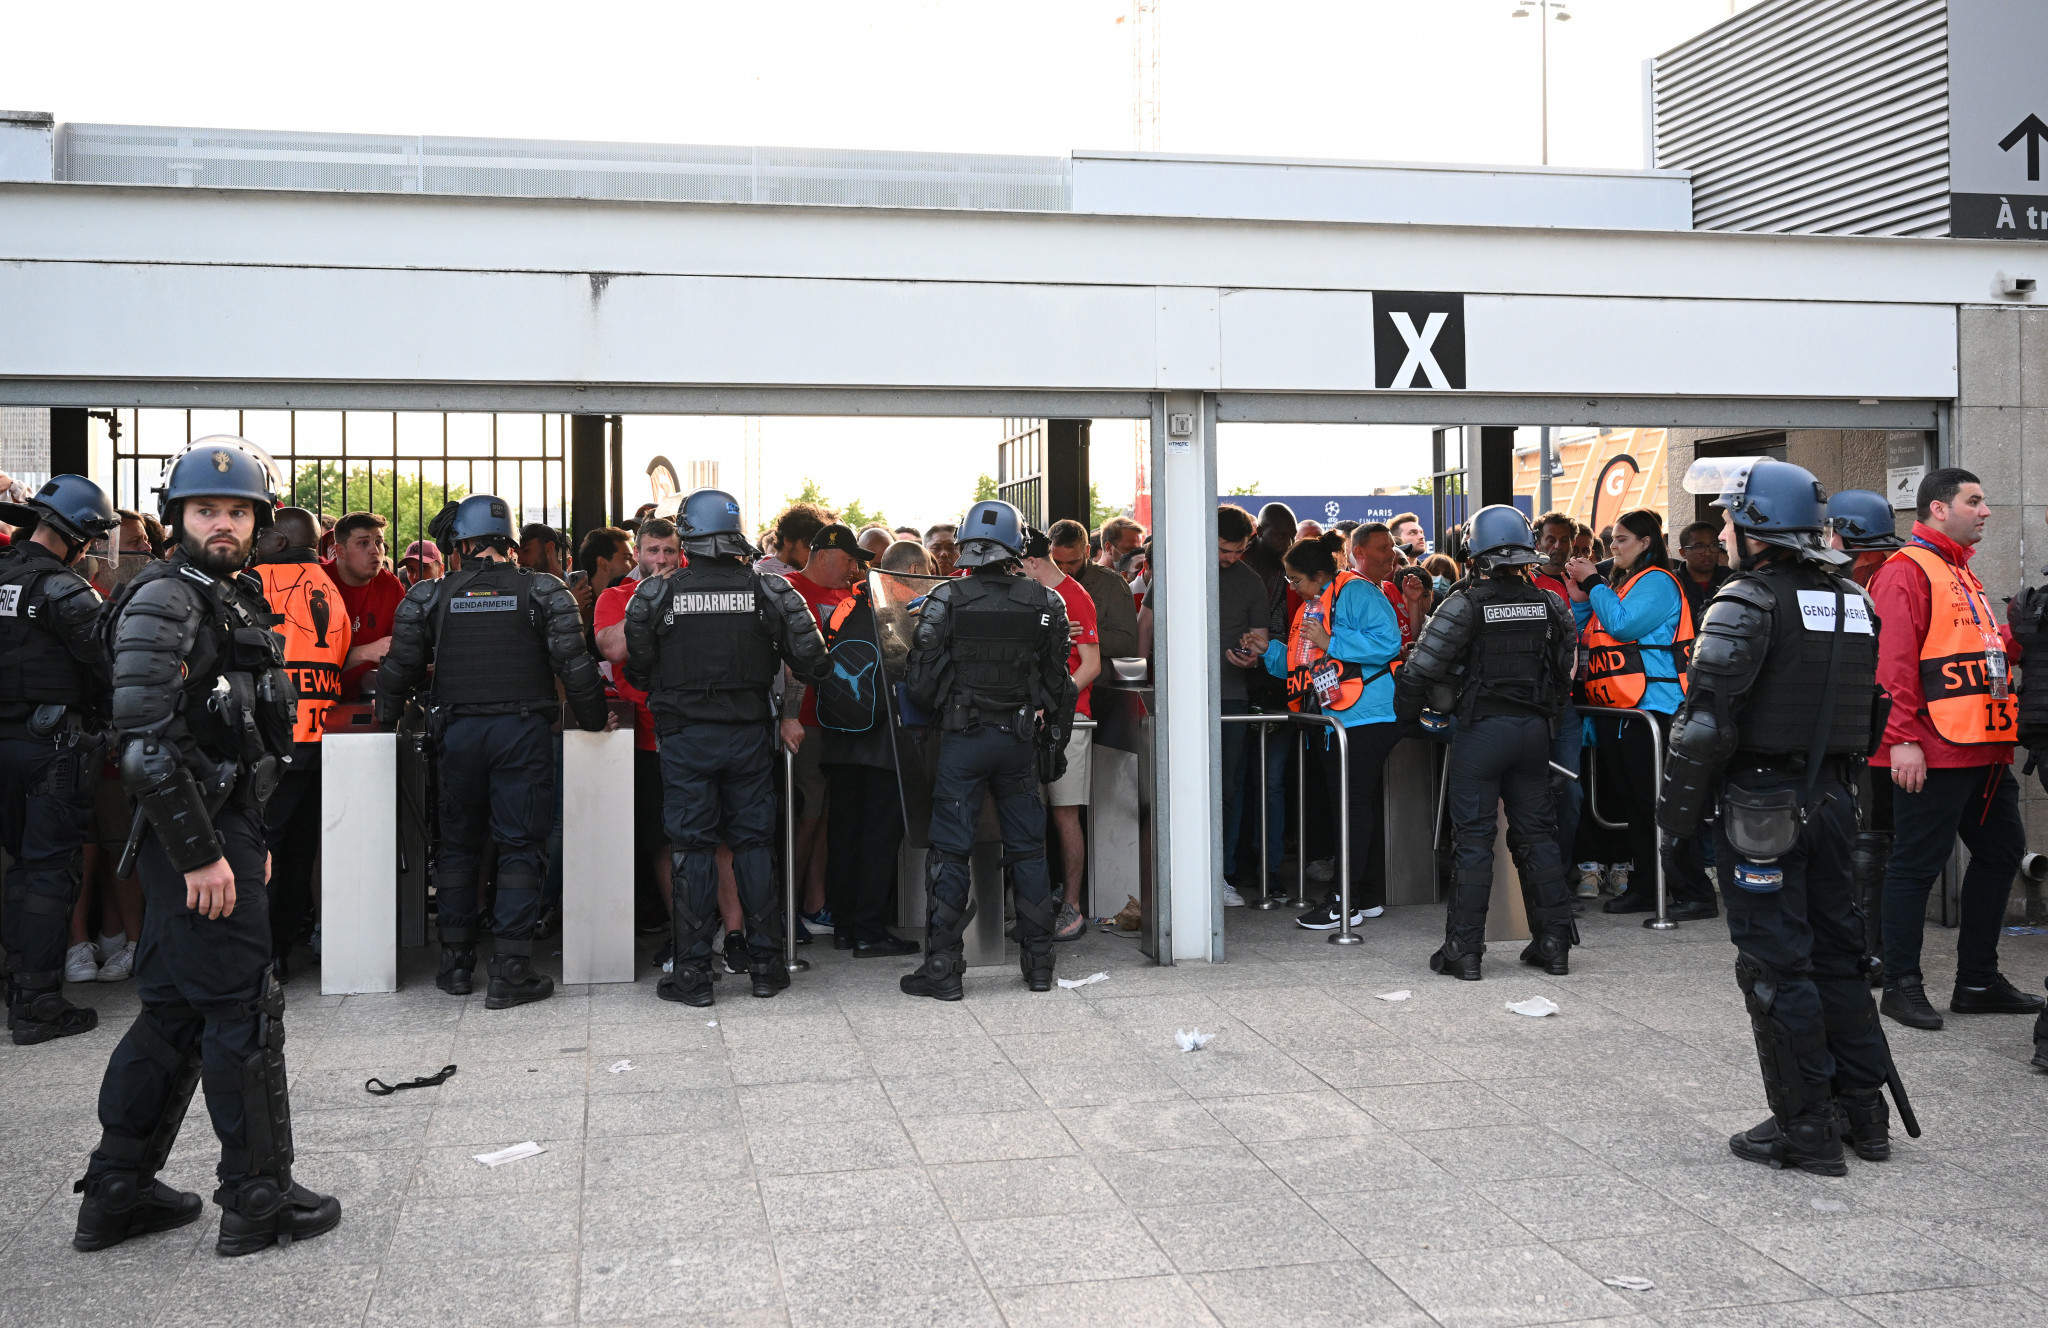 Security issues outside Paris 2024 venue Stade de France overshadow UEFA Champions League final